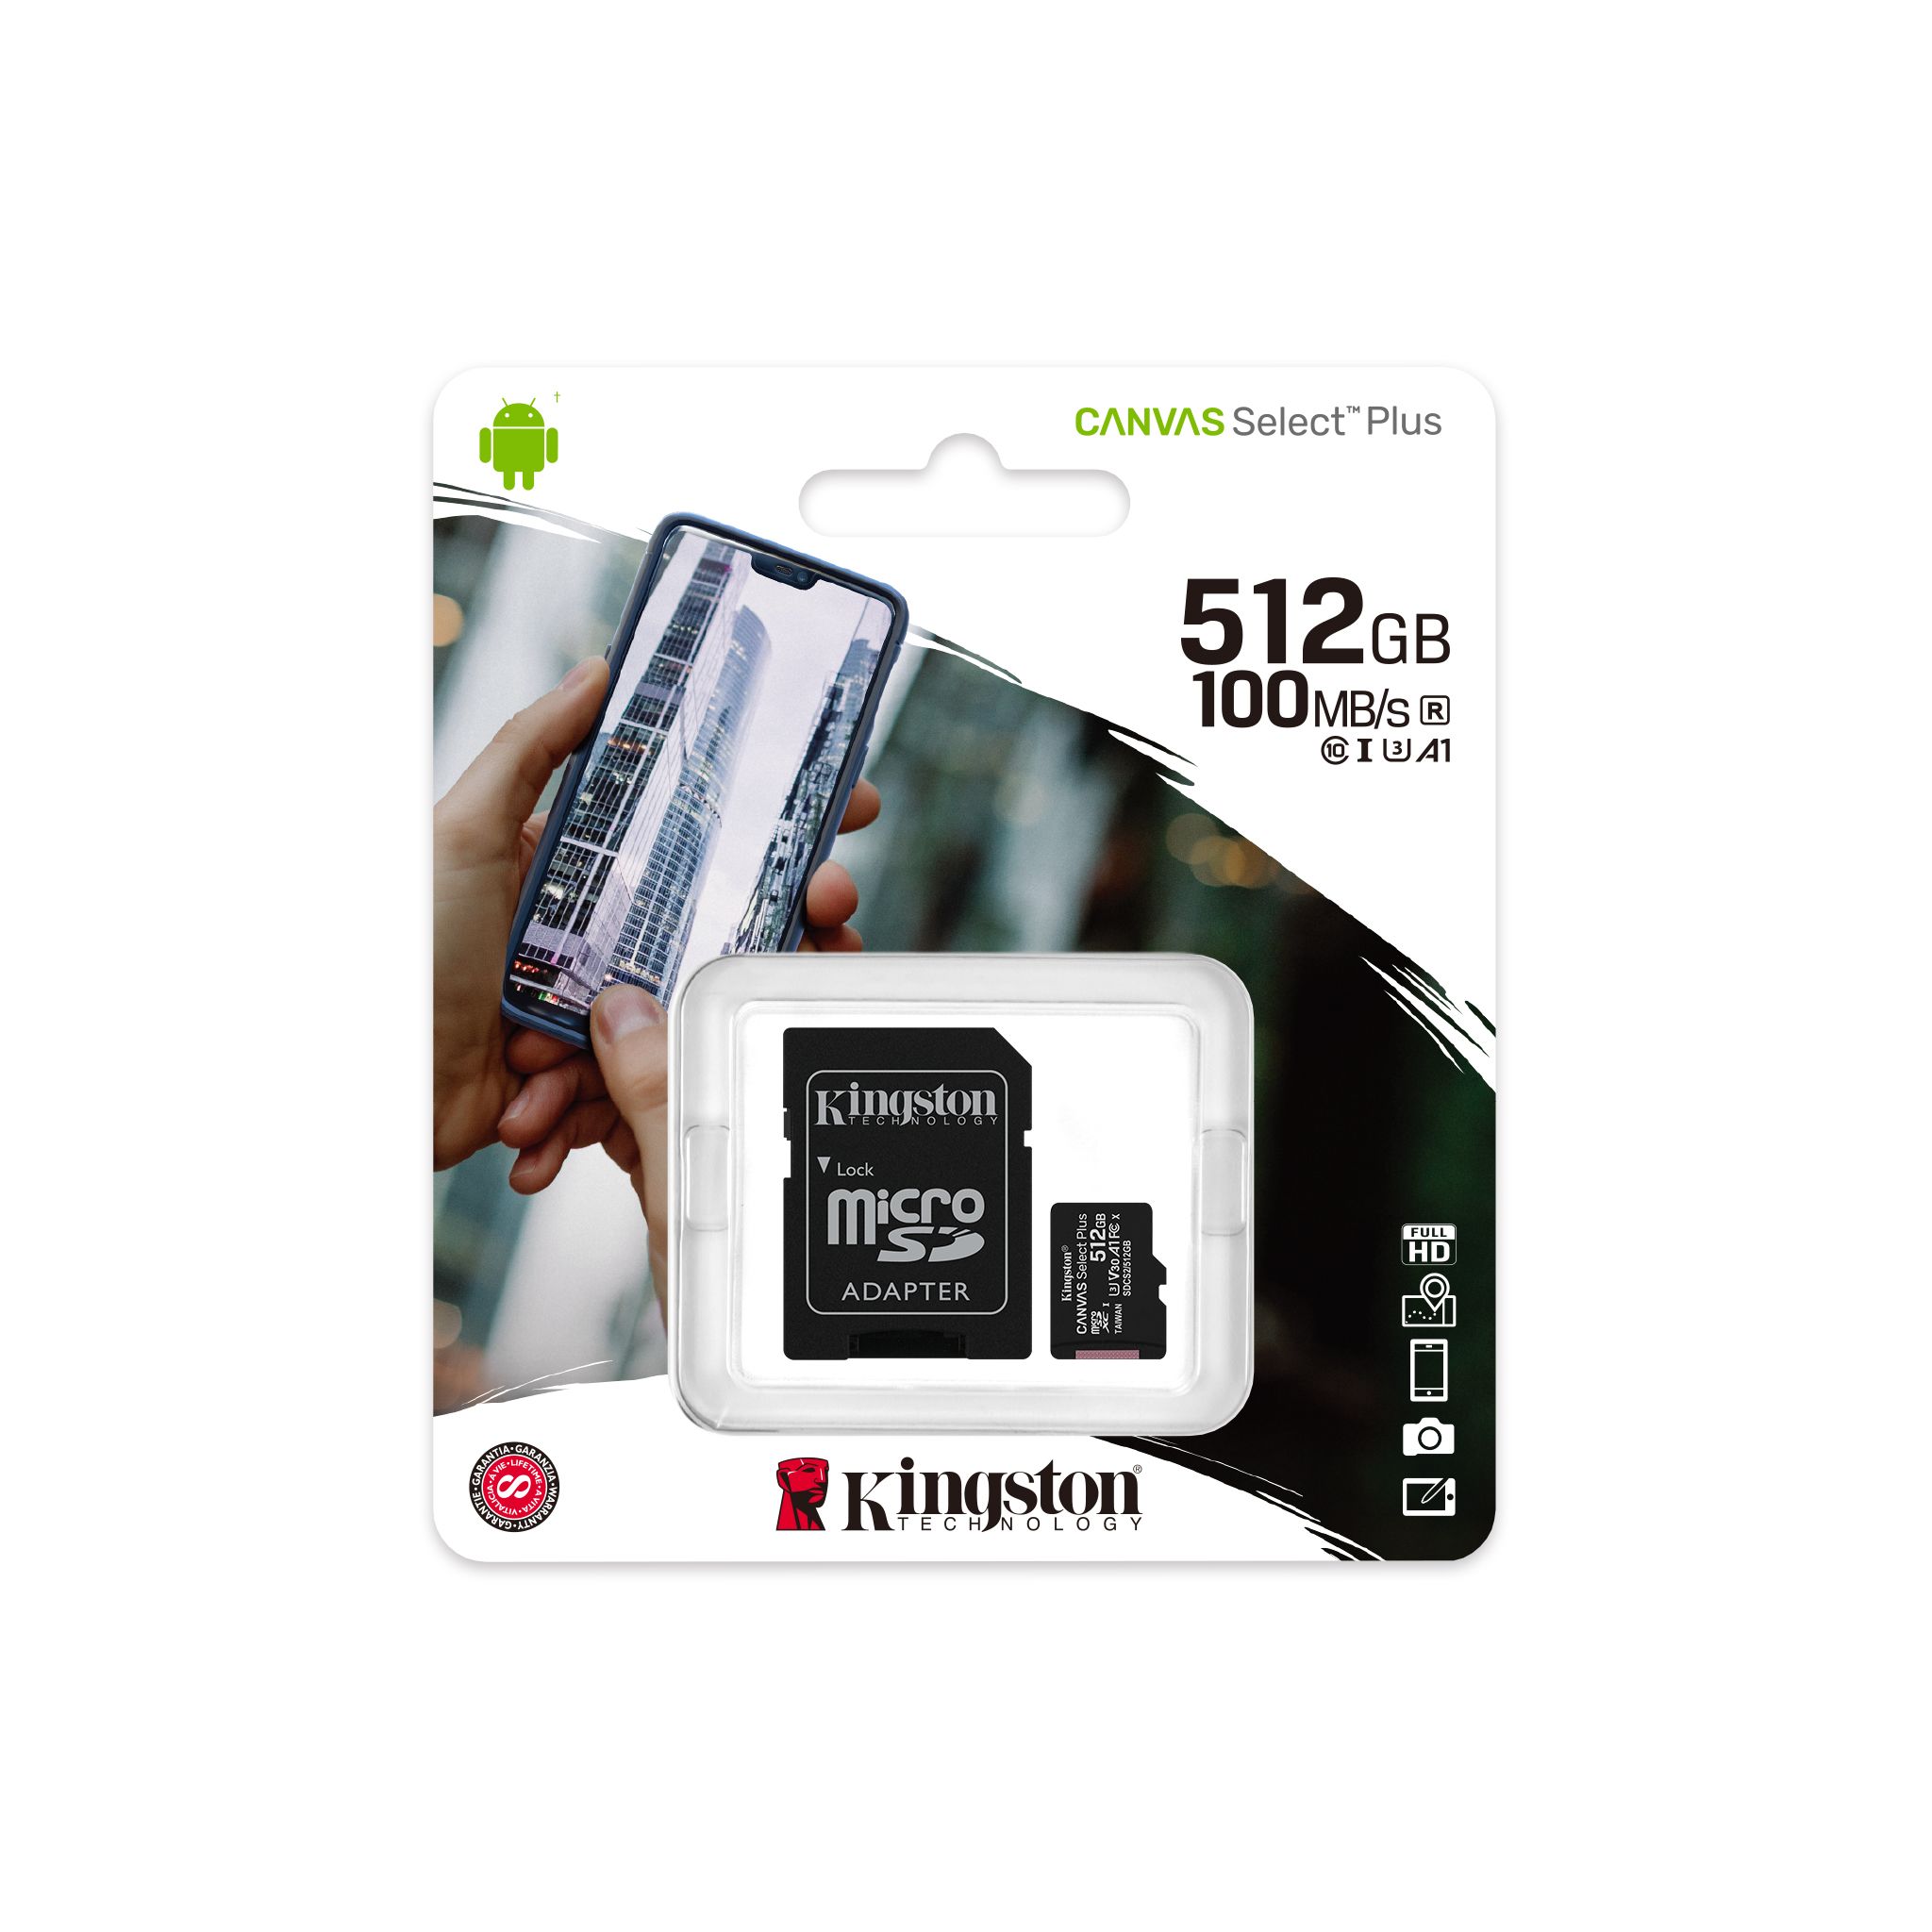 100MBs Works with Kingston Kingston 512GB Samsung Galaxy Tab 3 V MicroSDXC Canvas Select Plus Card Verified by SanFlash. 